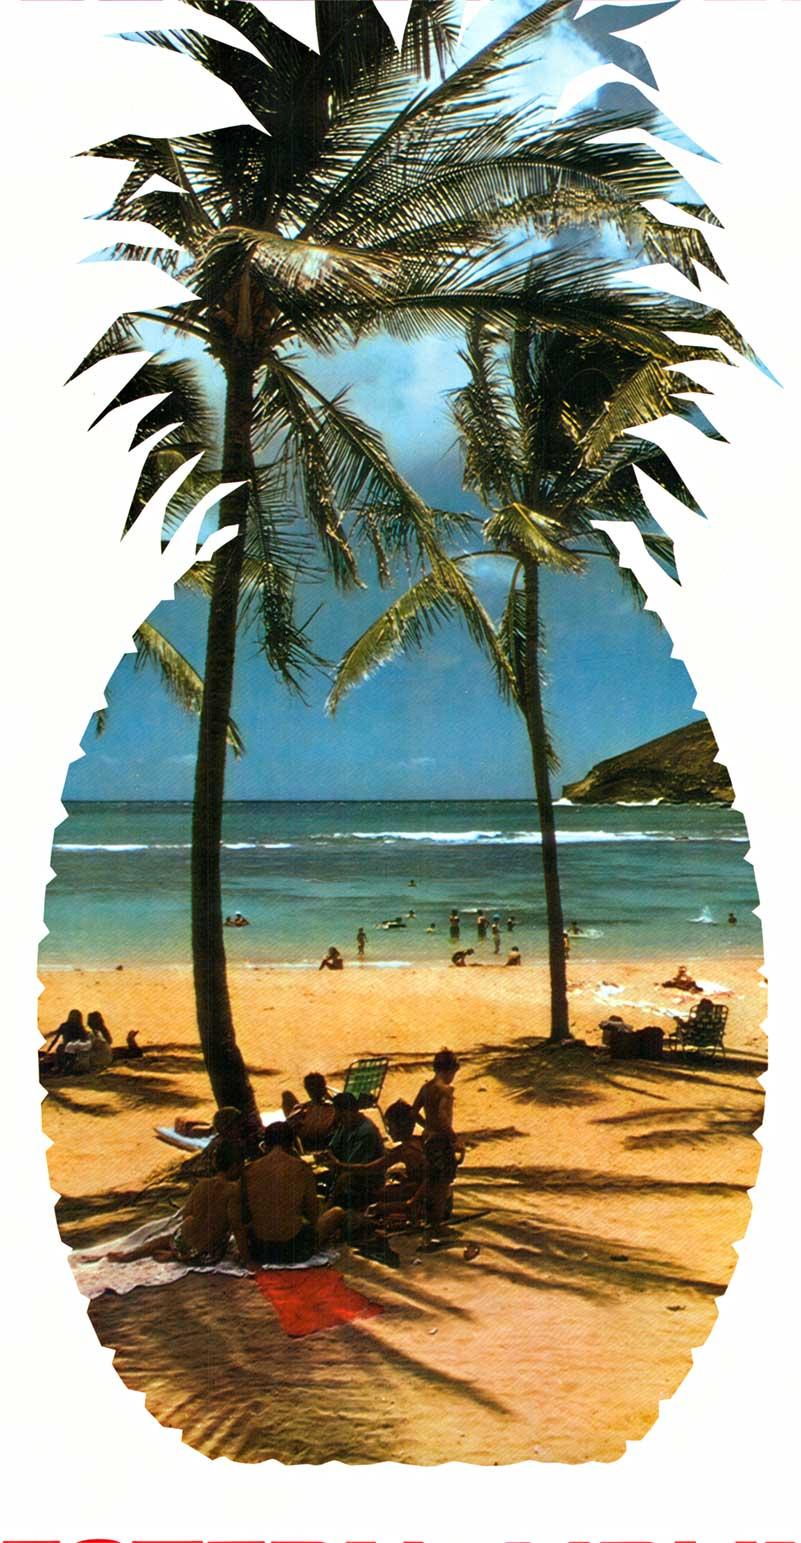 Original Hawaii Western Airlines vintage travel poster - Print by Unknown